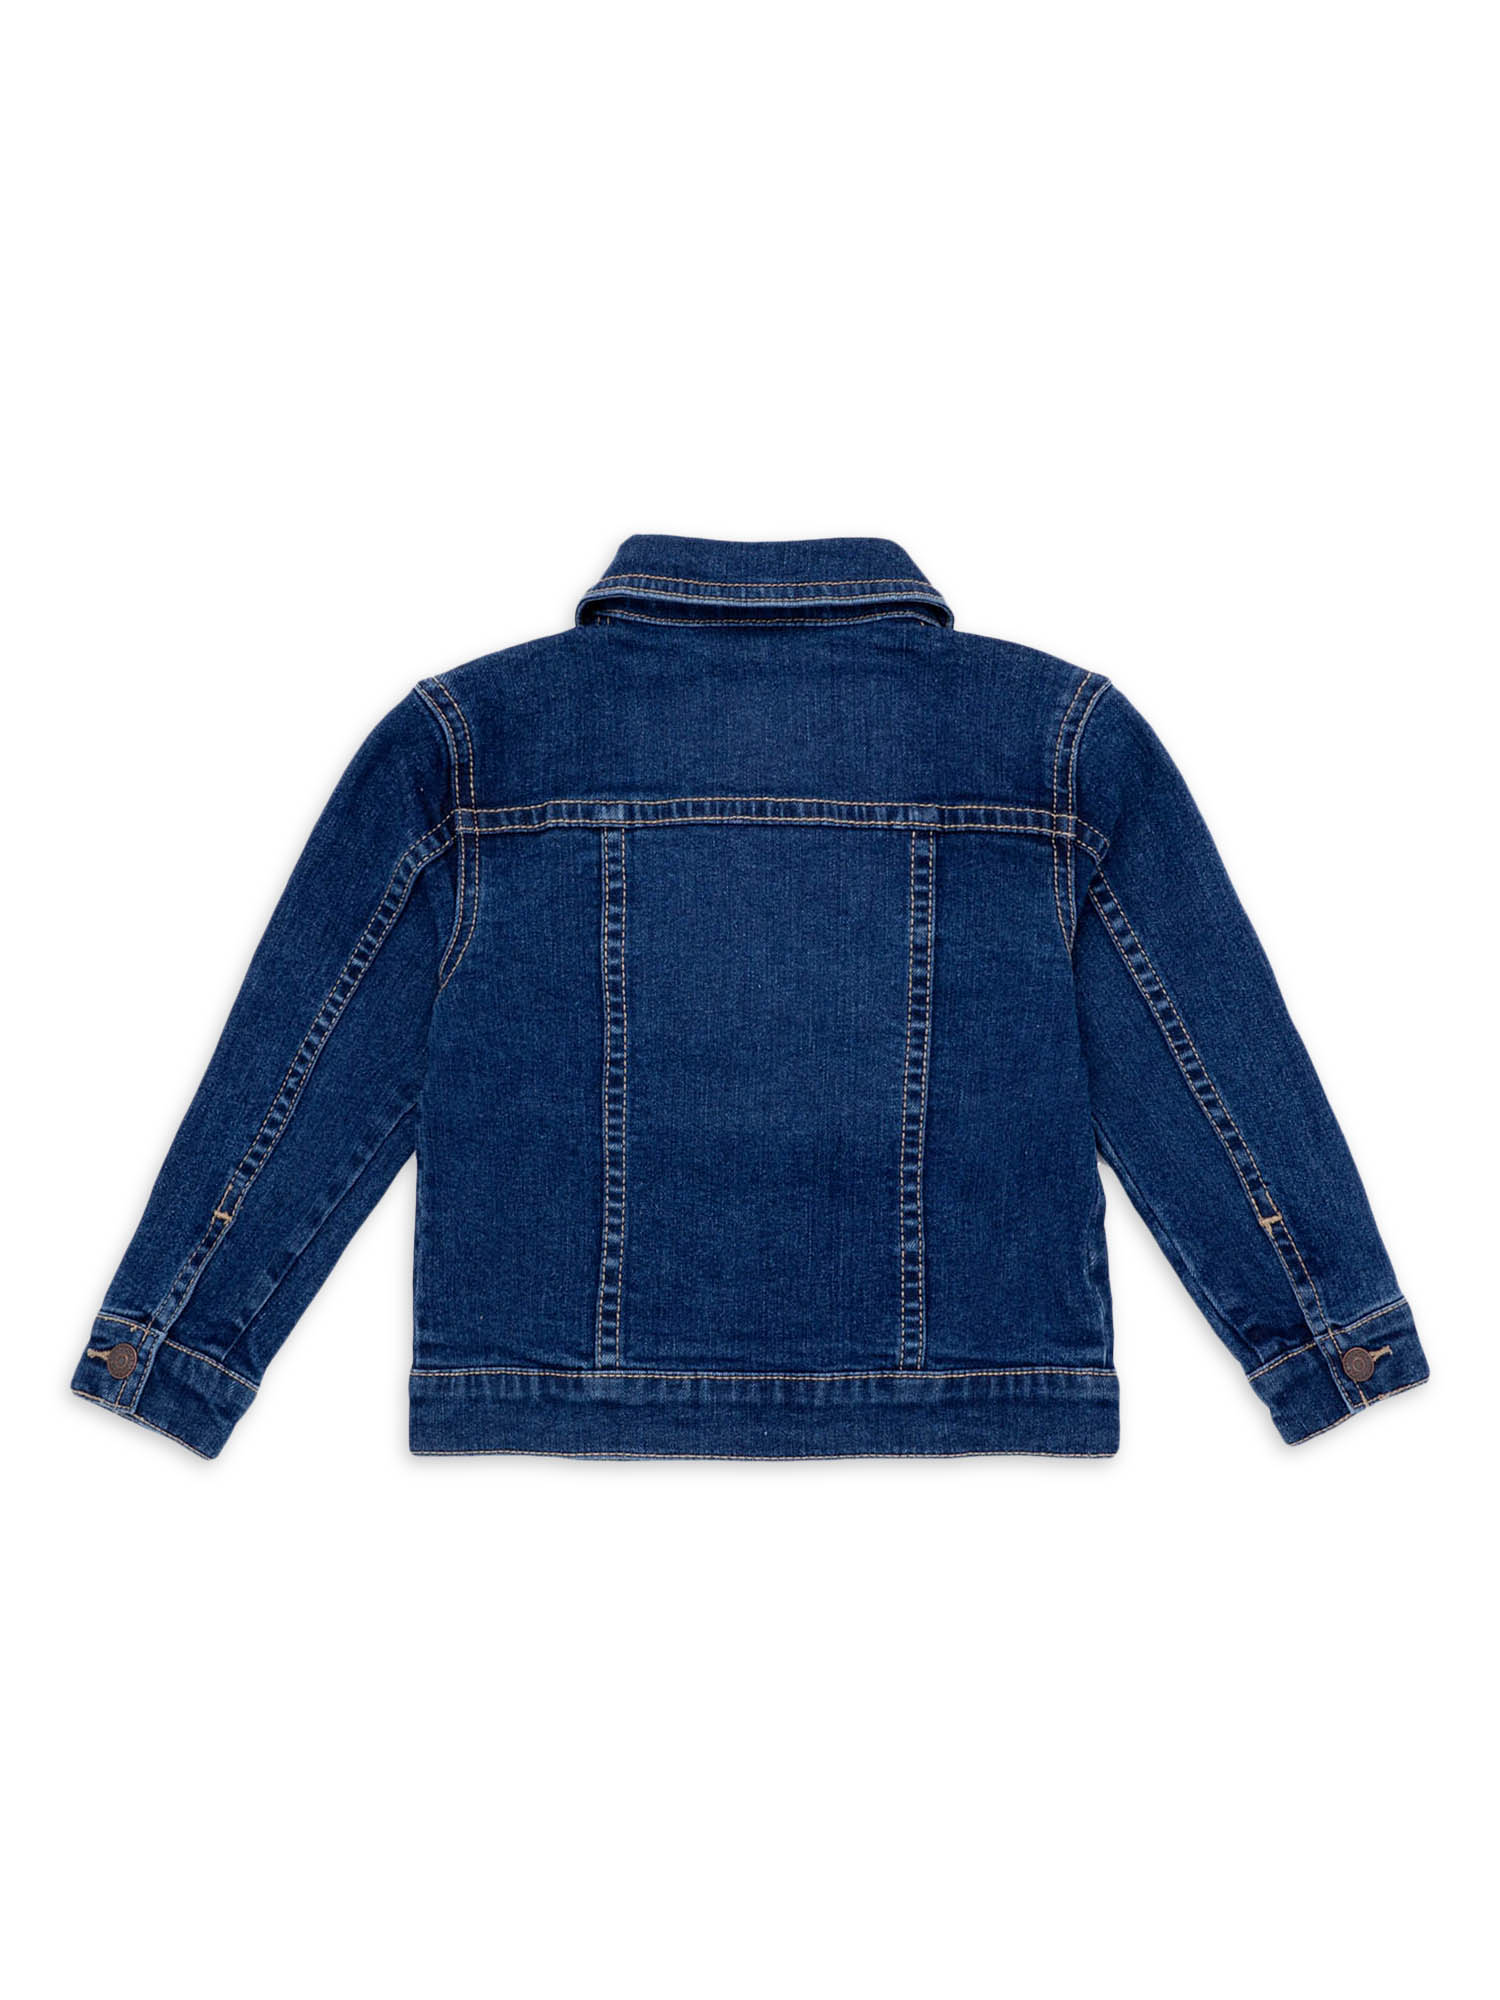 Jordache Long Sleeve Denim Single-Breasted Mid-Length Jacket (Infant or Toddler), 1 Pack - image 2 of 2